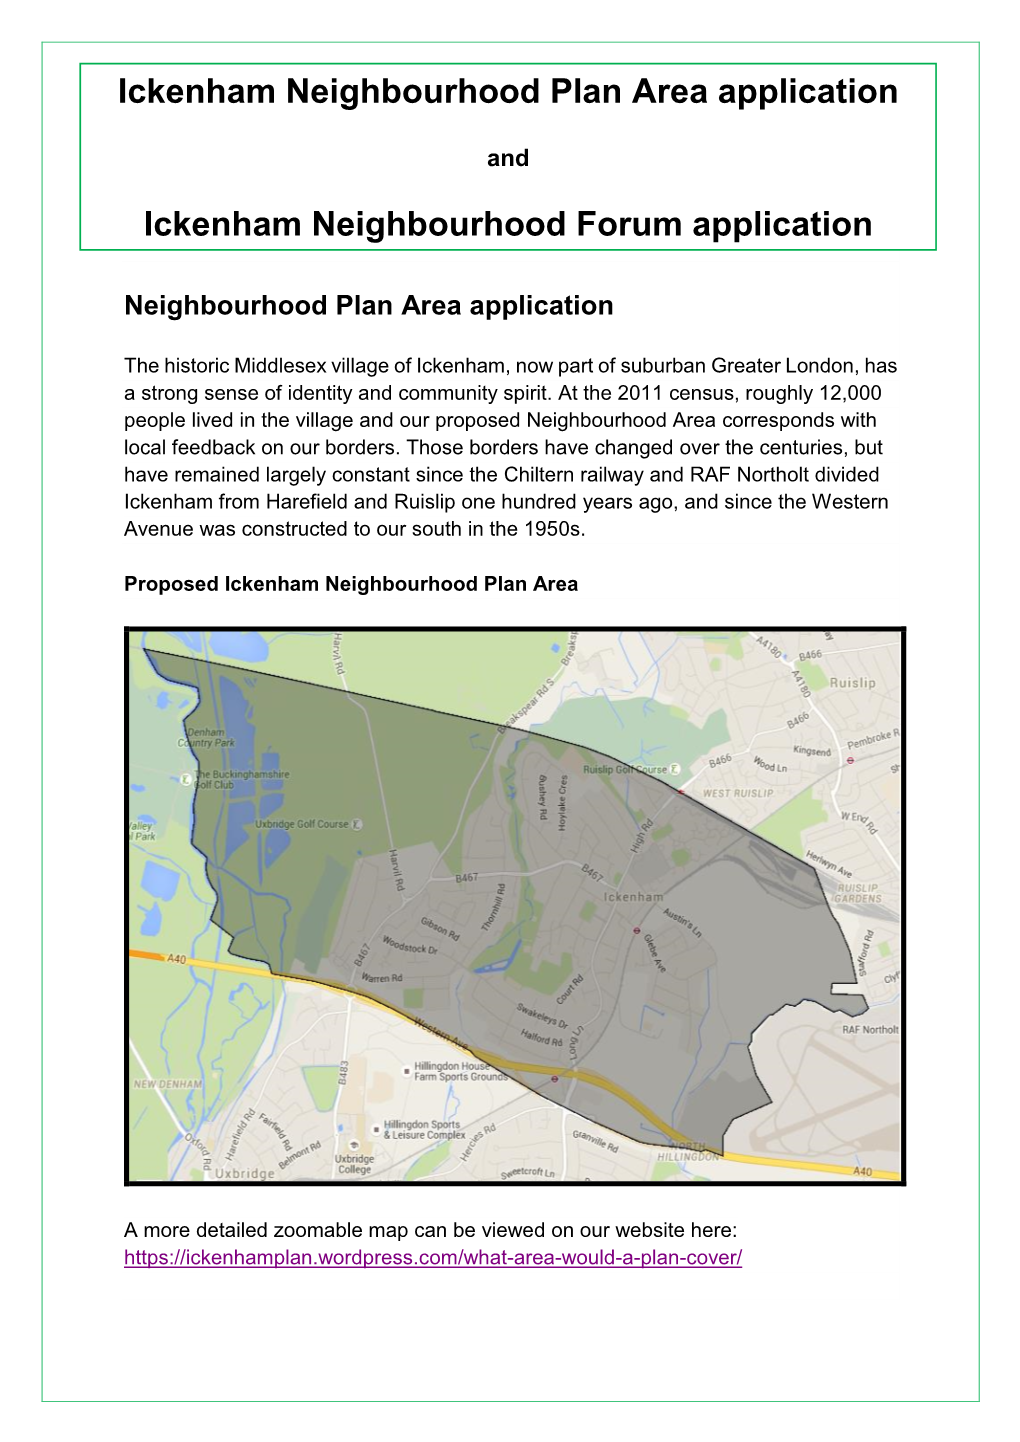 Ickenham Neighbourhood Forum Application